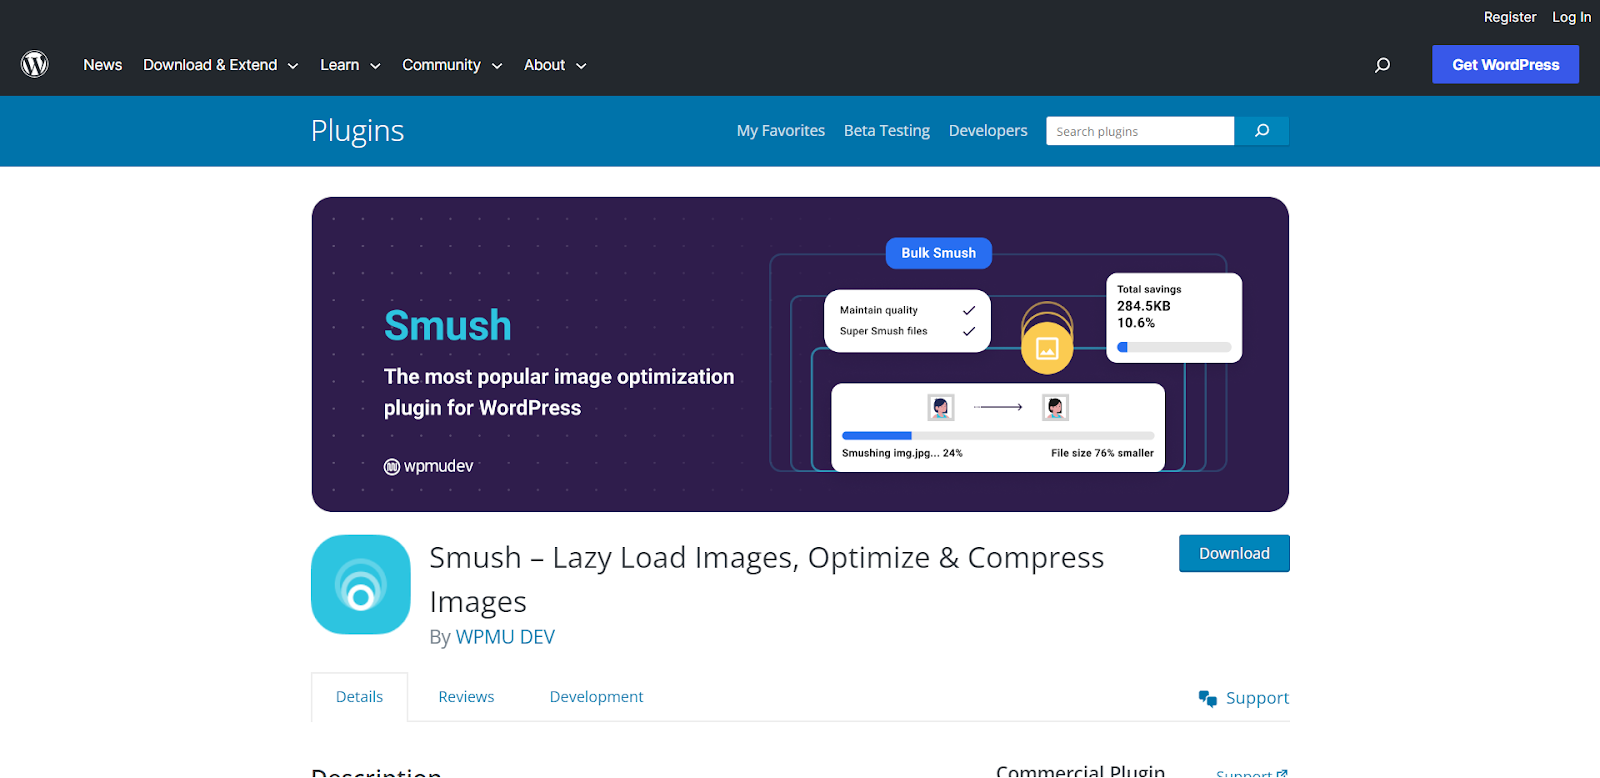 4. Smush: Lazy Load Images, Optimize & Compress Images plugin